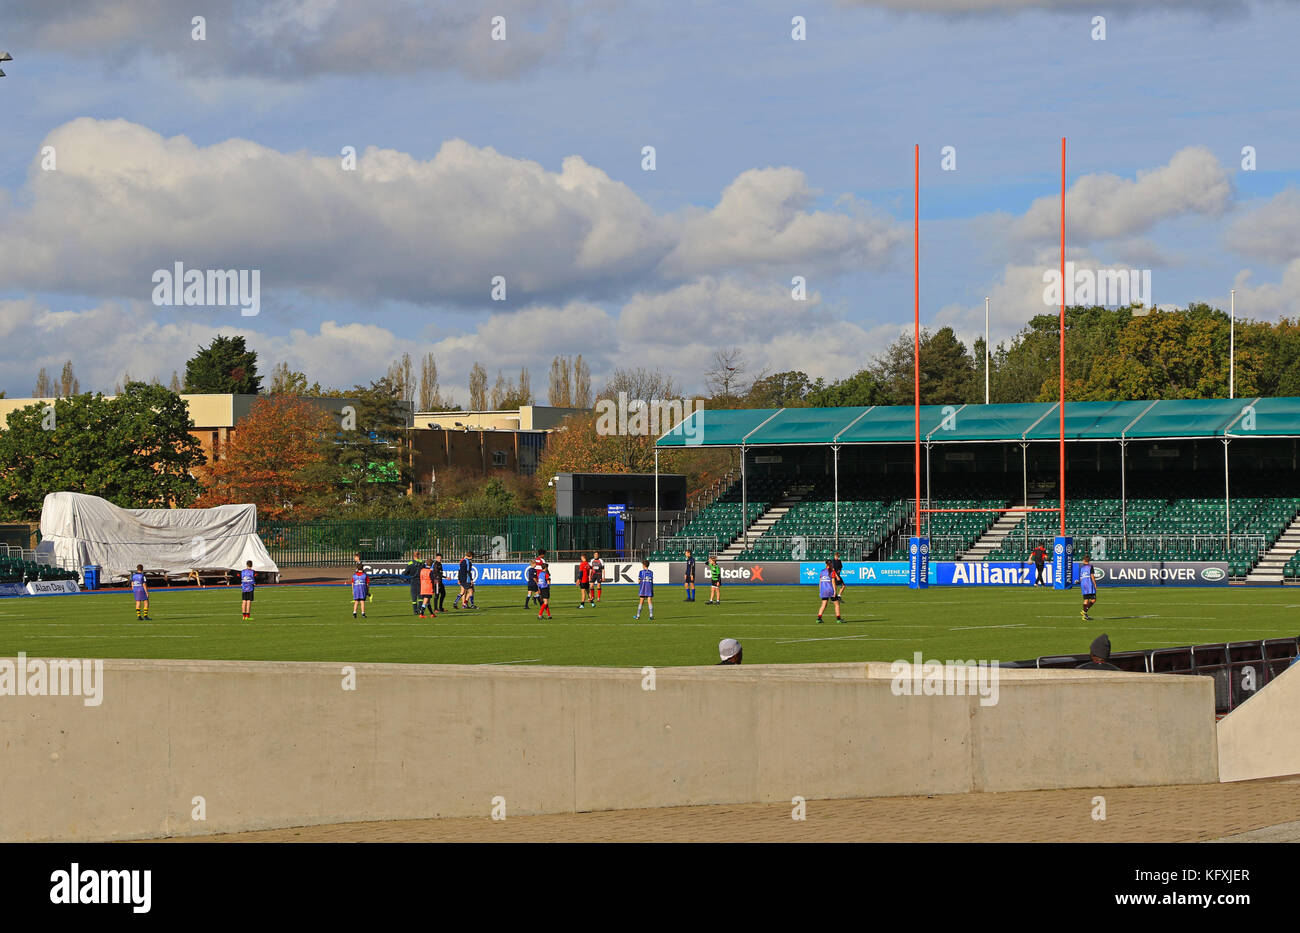 Allianz Park stadium, home of the Saracens Rugby team, Barnet Copthall, UK Stock Photo